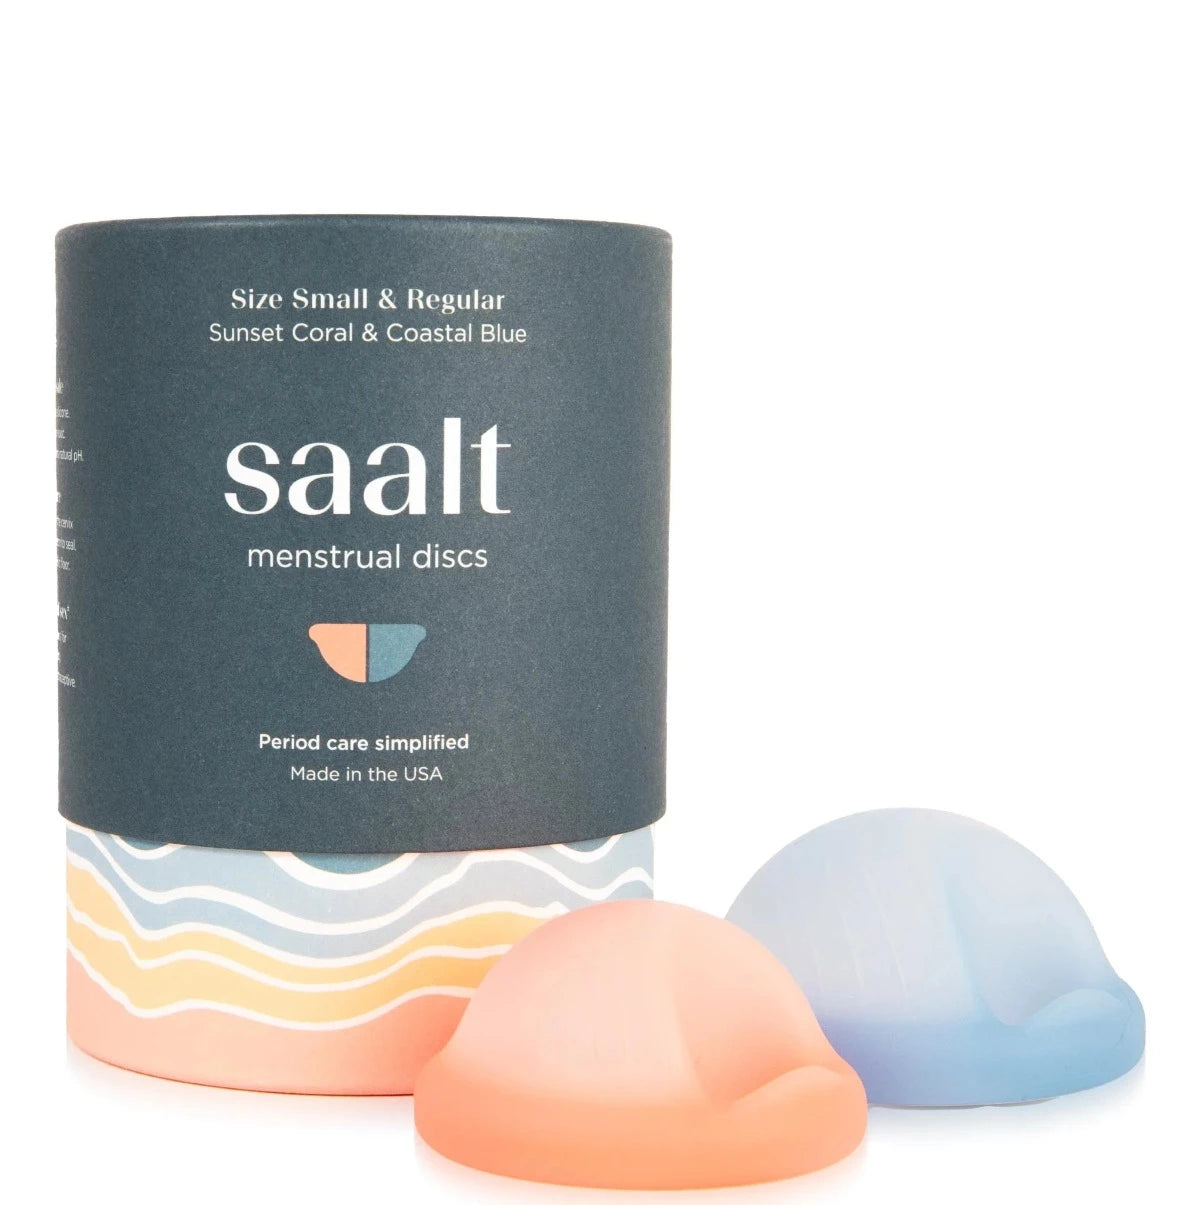 Saalt Menstrual Disc Duo | Small & Regular | The Period Co.